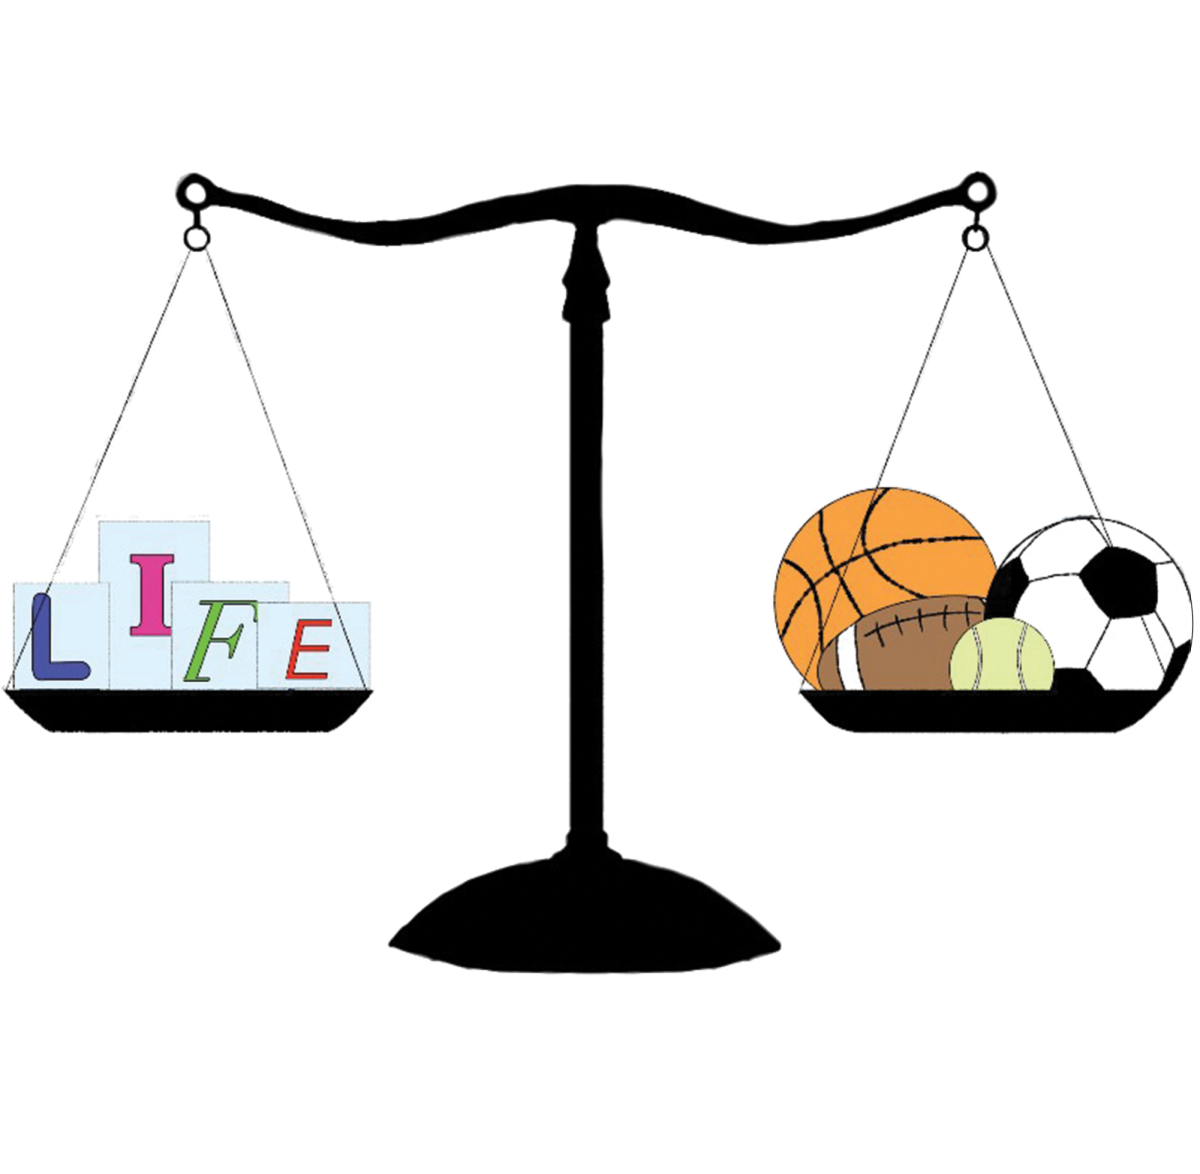 Finding+balance+benefits+student+athletes